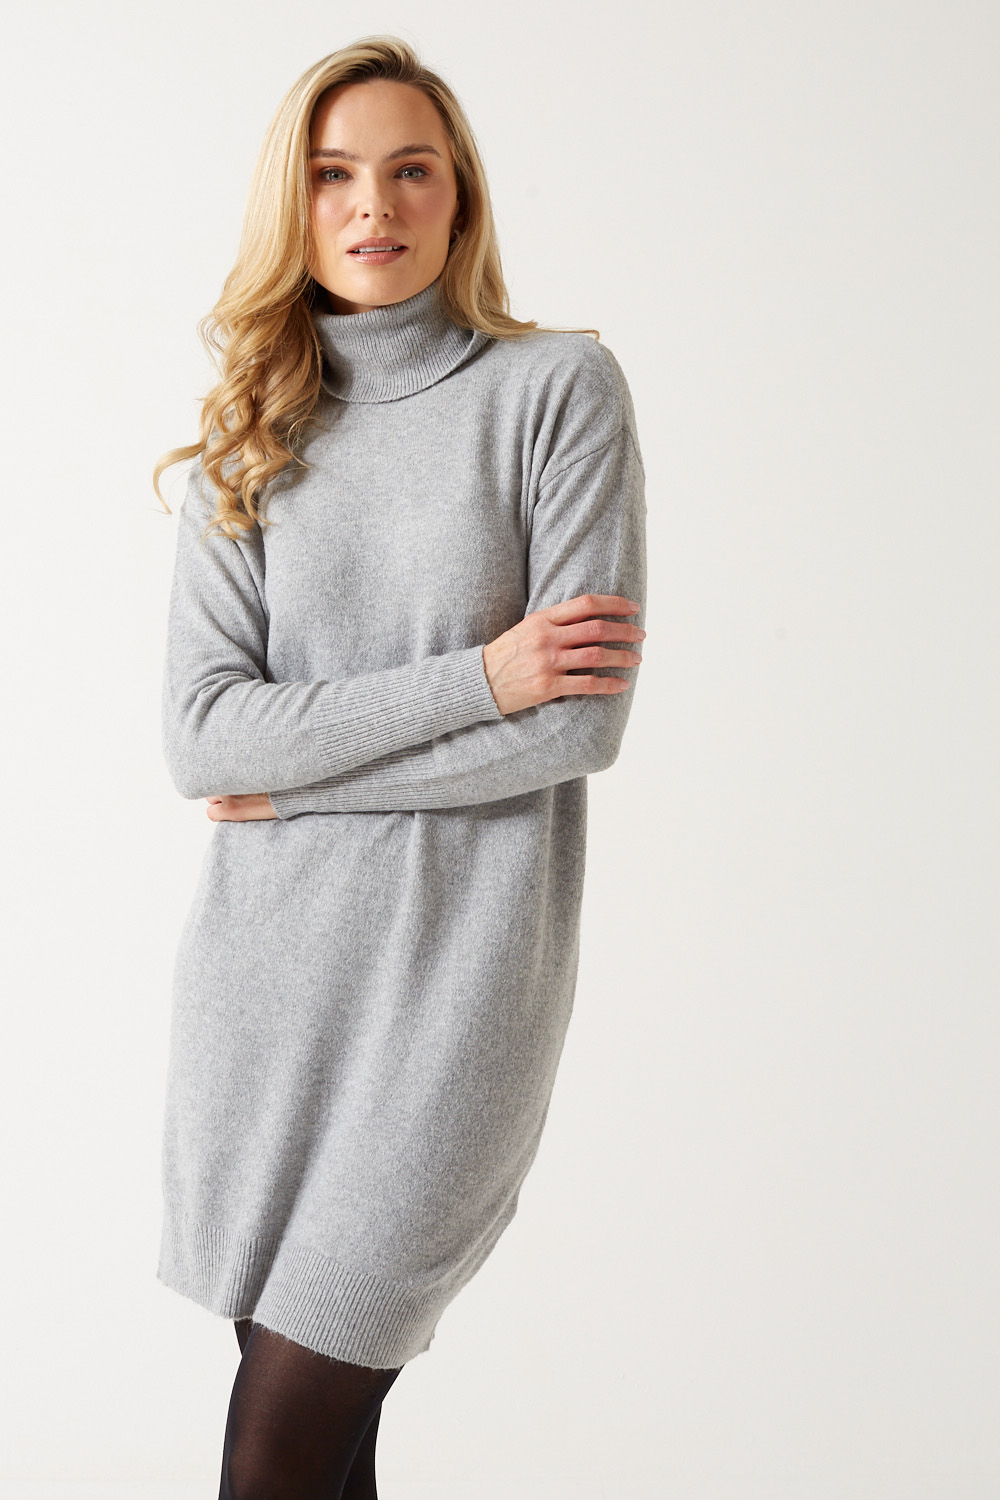 Dress iCLOTHING Moda iCLOTHING in Grey Rollneck Jumper | Brilliant Light Vero -